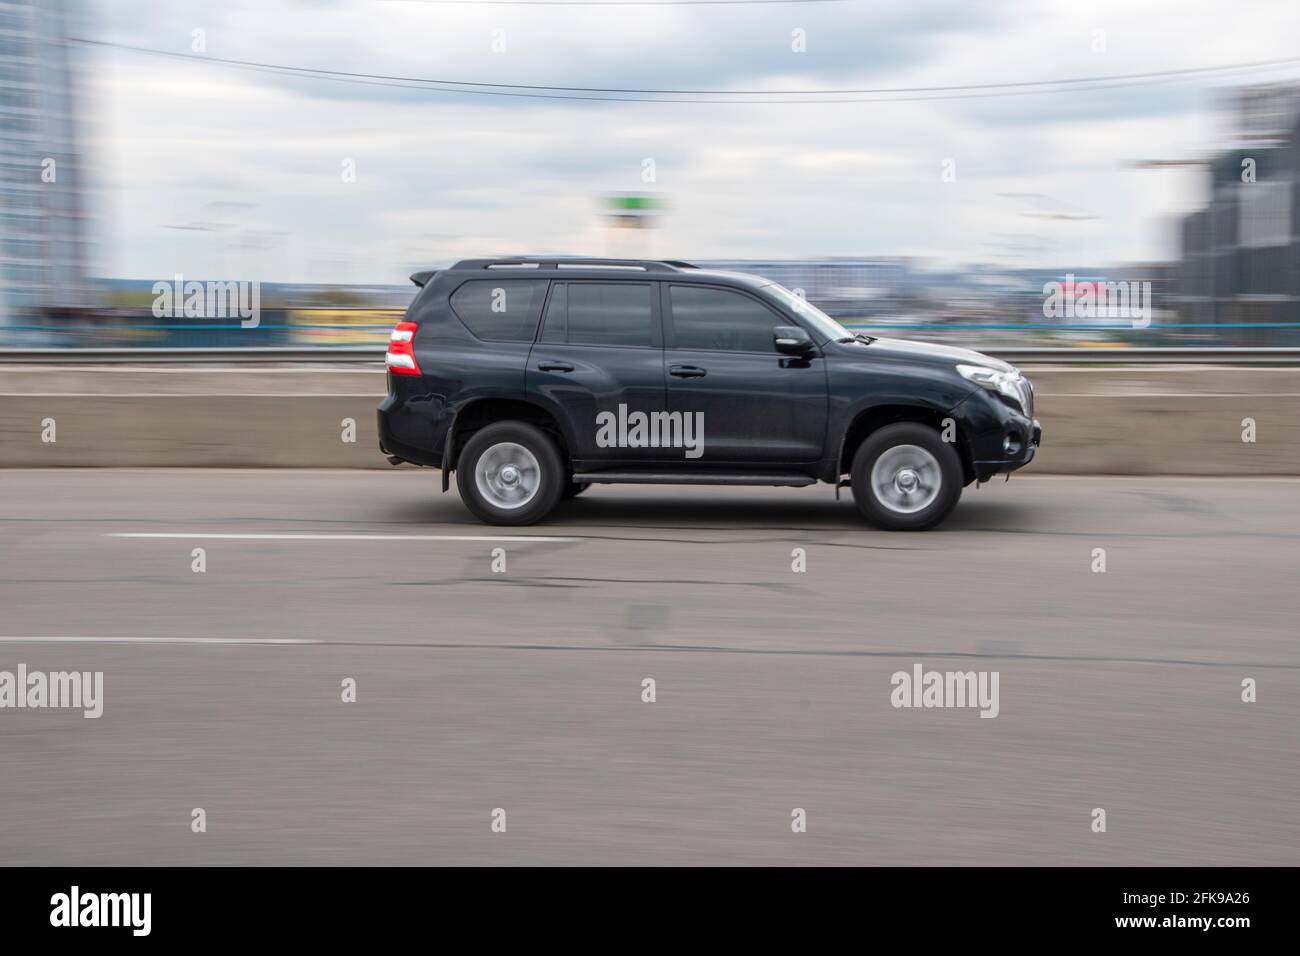 Ukraine, Kyiv - 20 April 2021: Black Toyota Land Cruiser Prado car moving on the street. Editorial Stock Photo